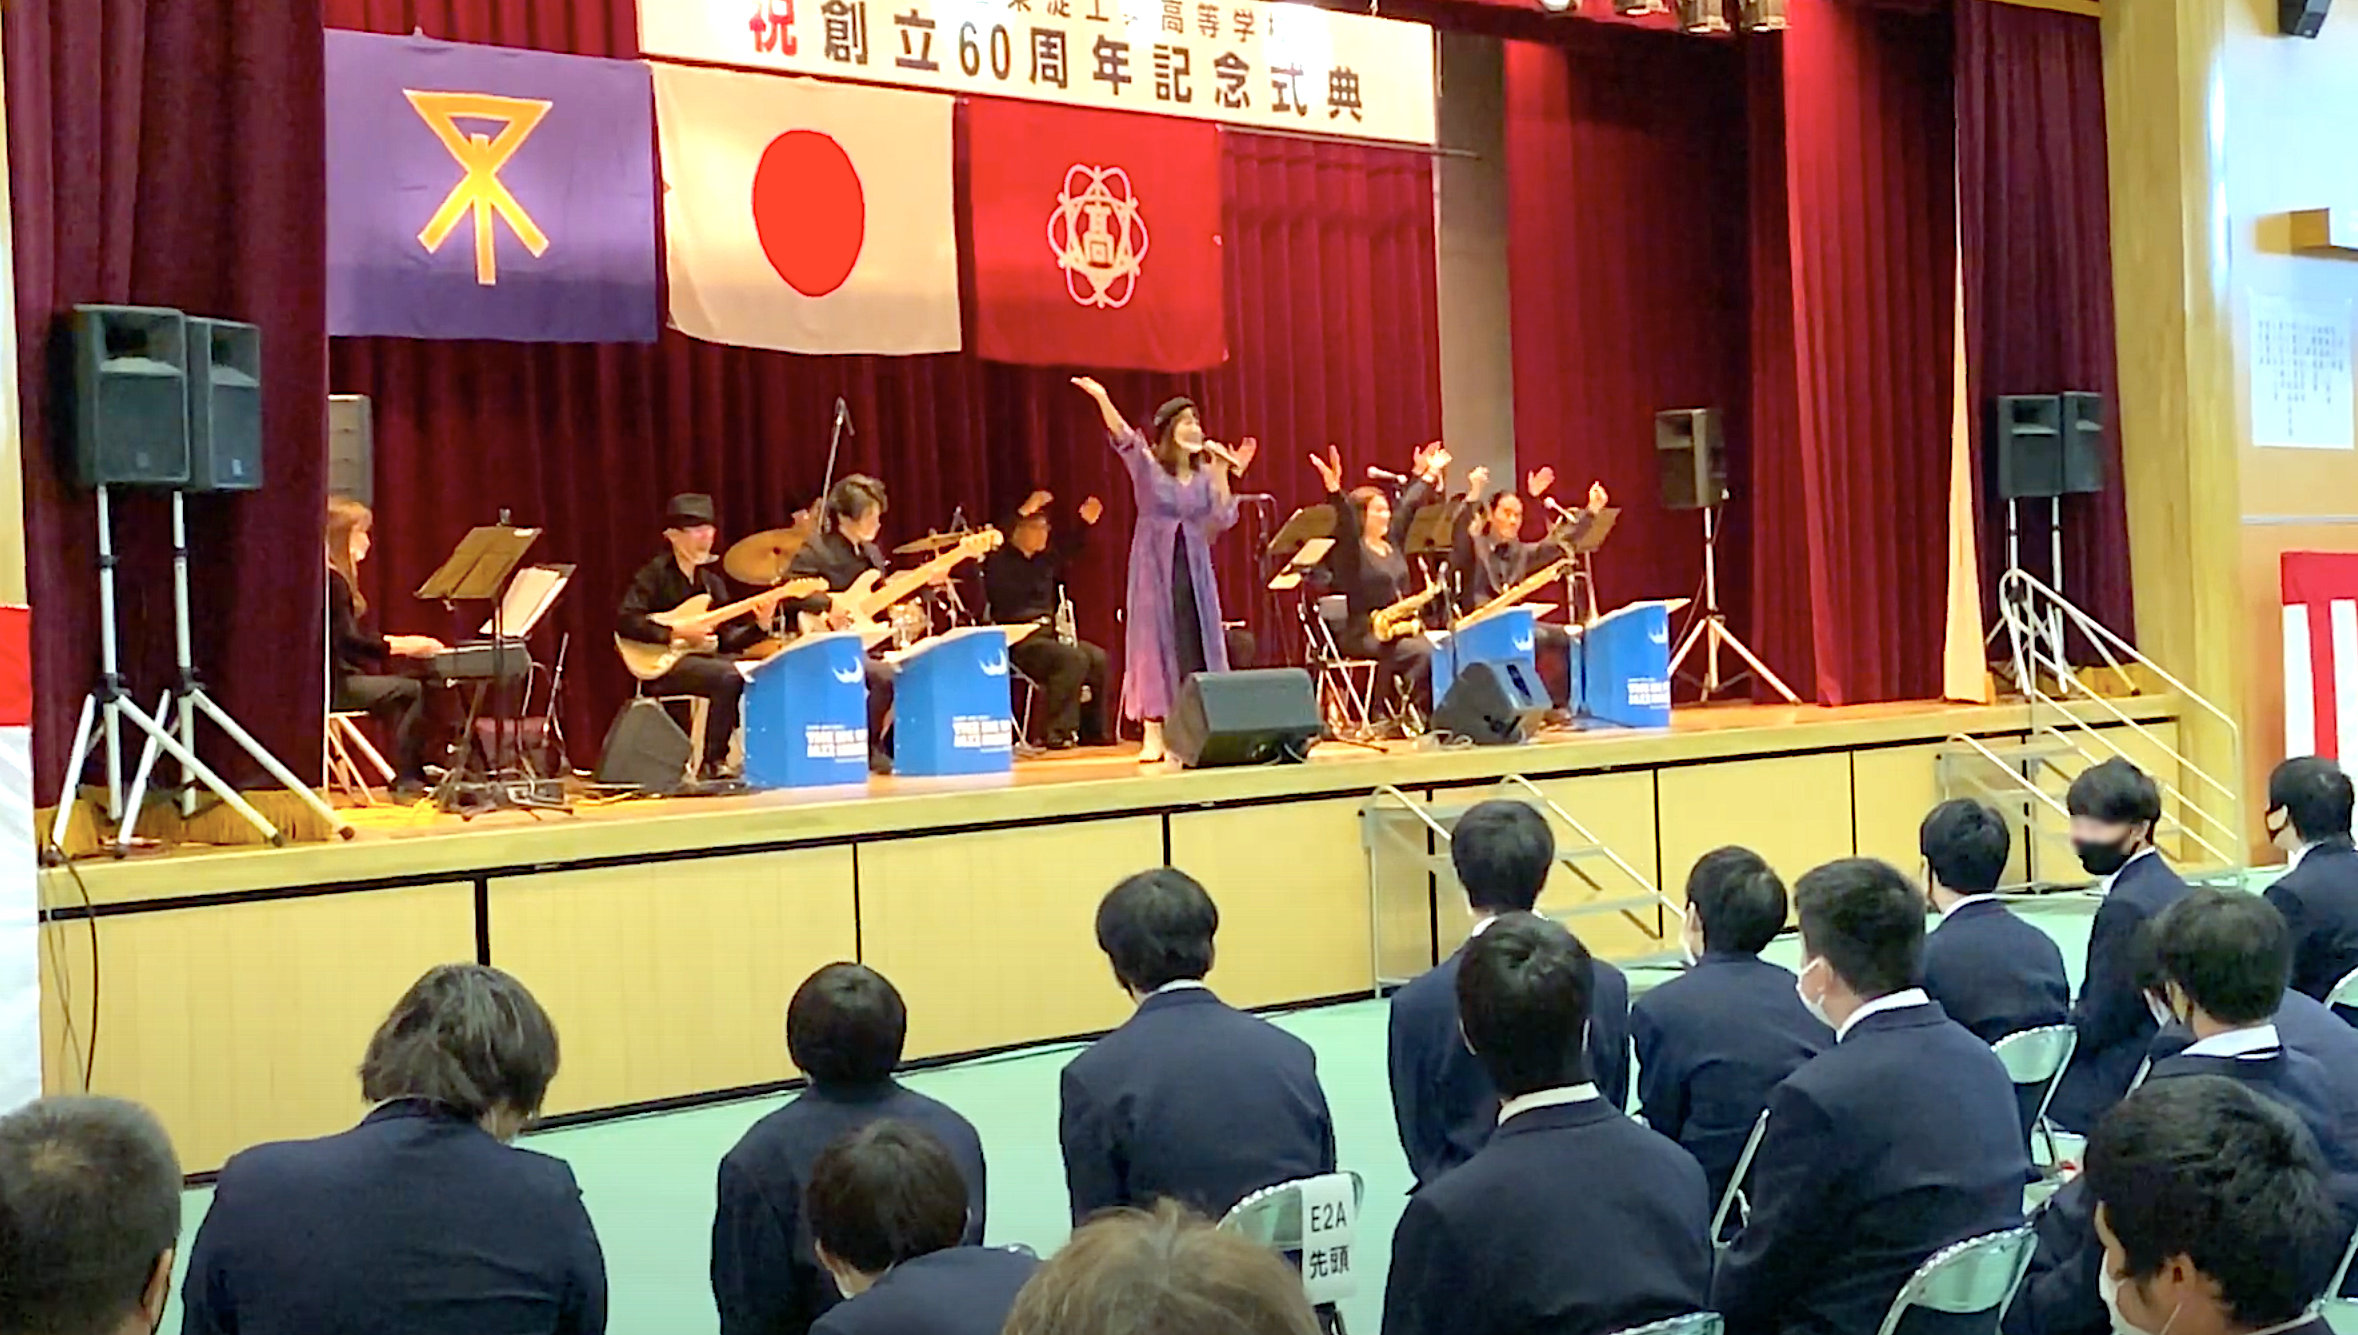 【実績更新】音楽鑑賞会 大阪市立東淀工業高等学校 追加しました。